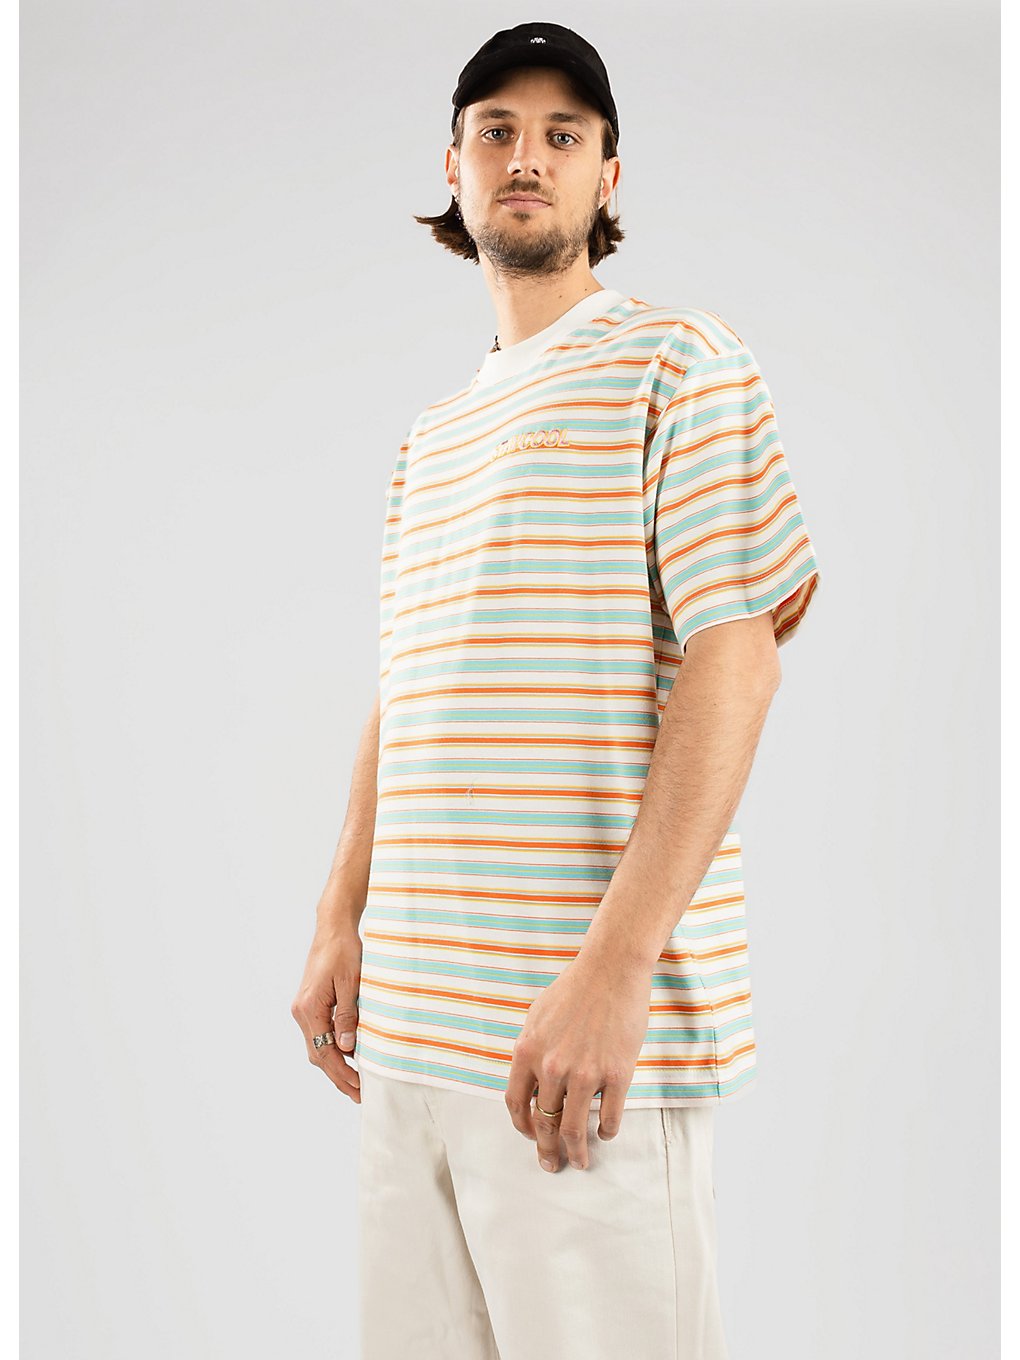 Staycoolnyc Caribbean Striped T-Shirt multi kaufen